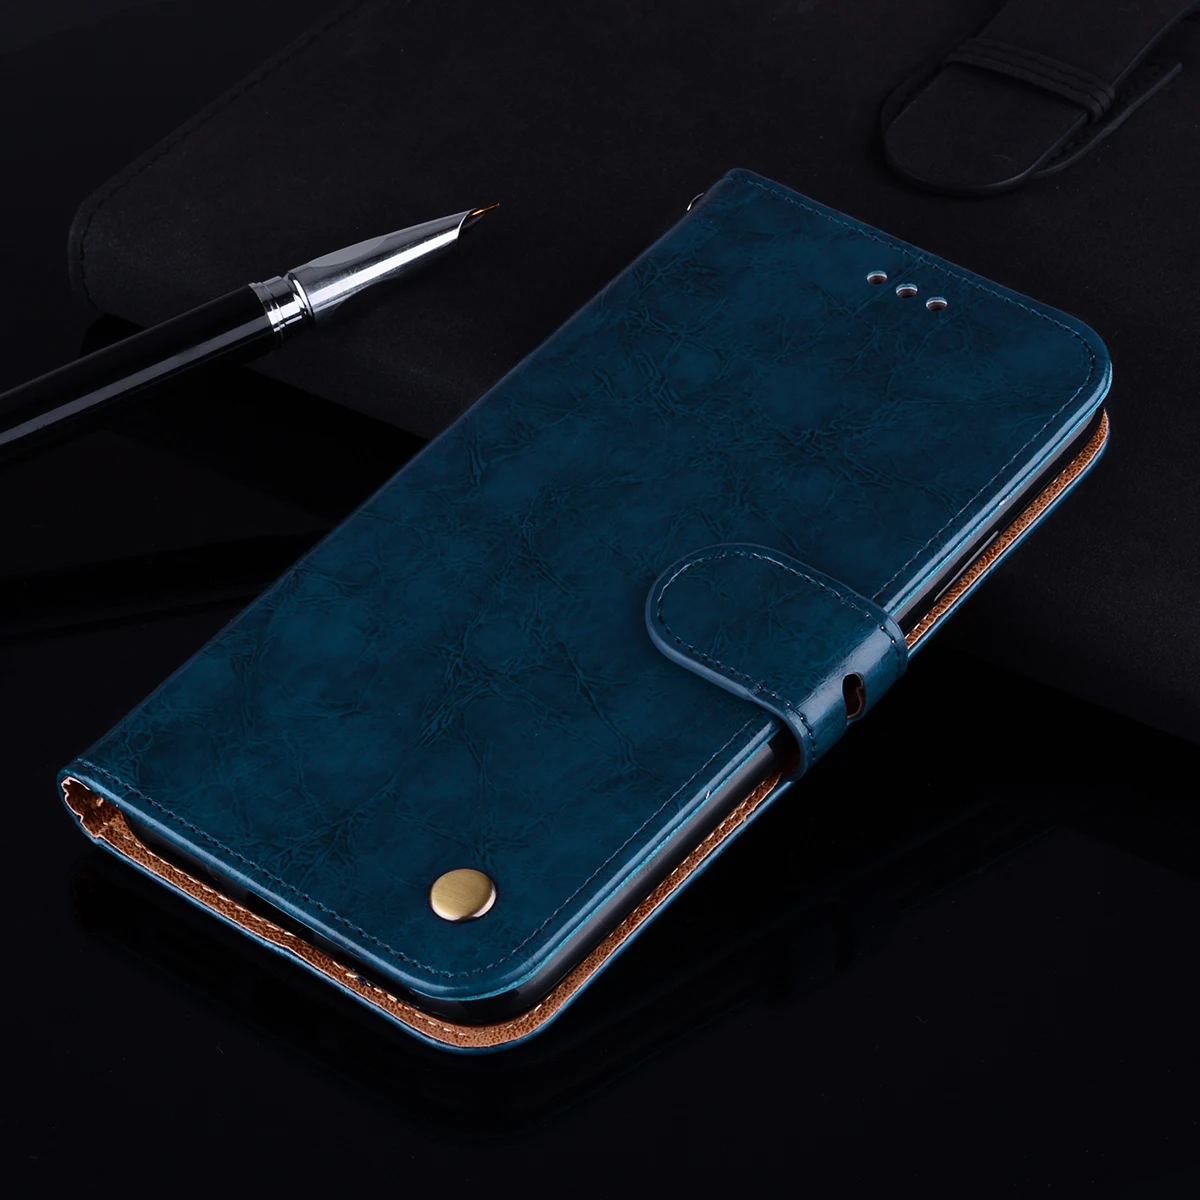 Кожаный чехол-бумажник для huawei Honor 10i HRY-LX1T, чехол-книжка для телефона huawei Hono 10 Lite HRY-LX1 Honor View 10 V10, силиконовый чехол - Цвет: dark blue